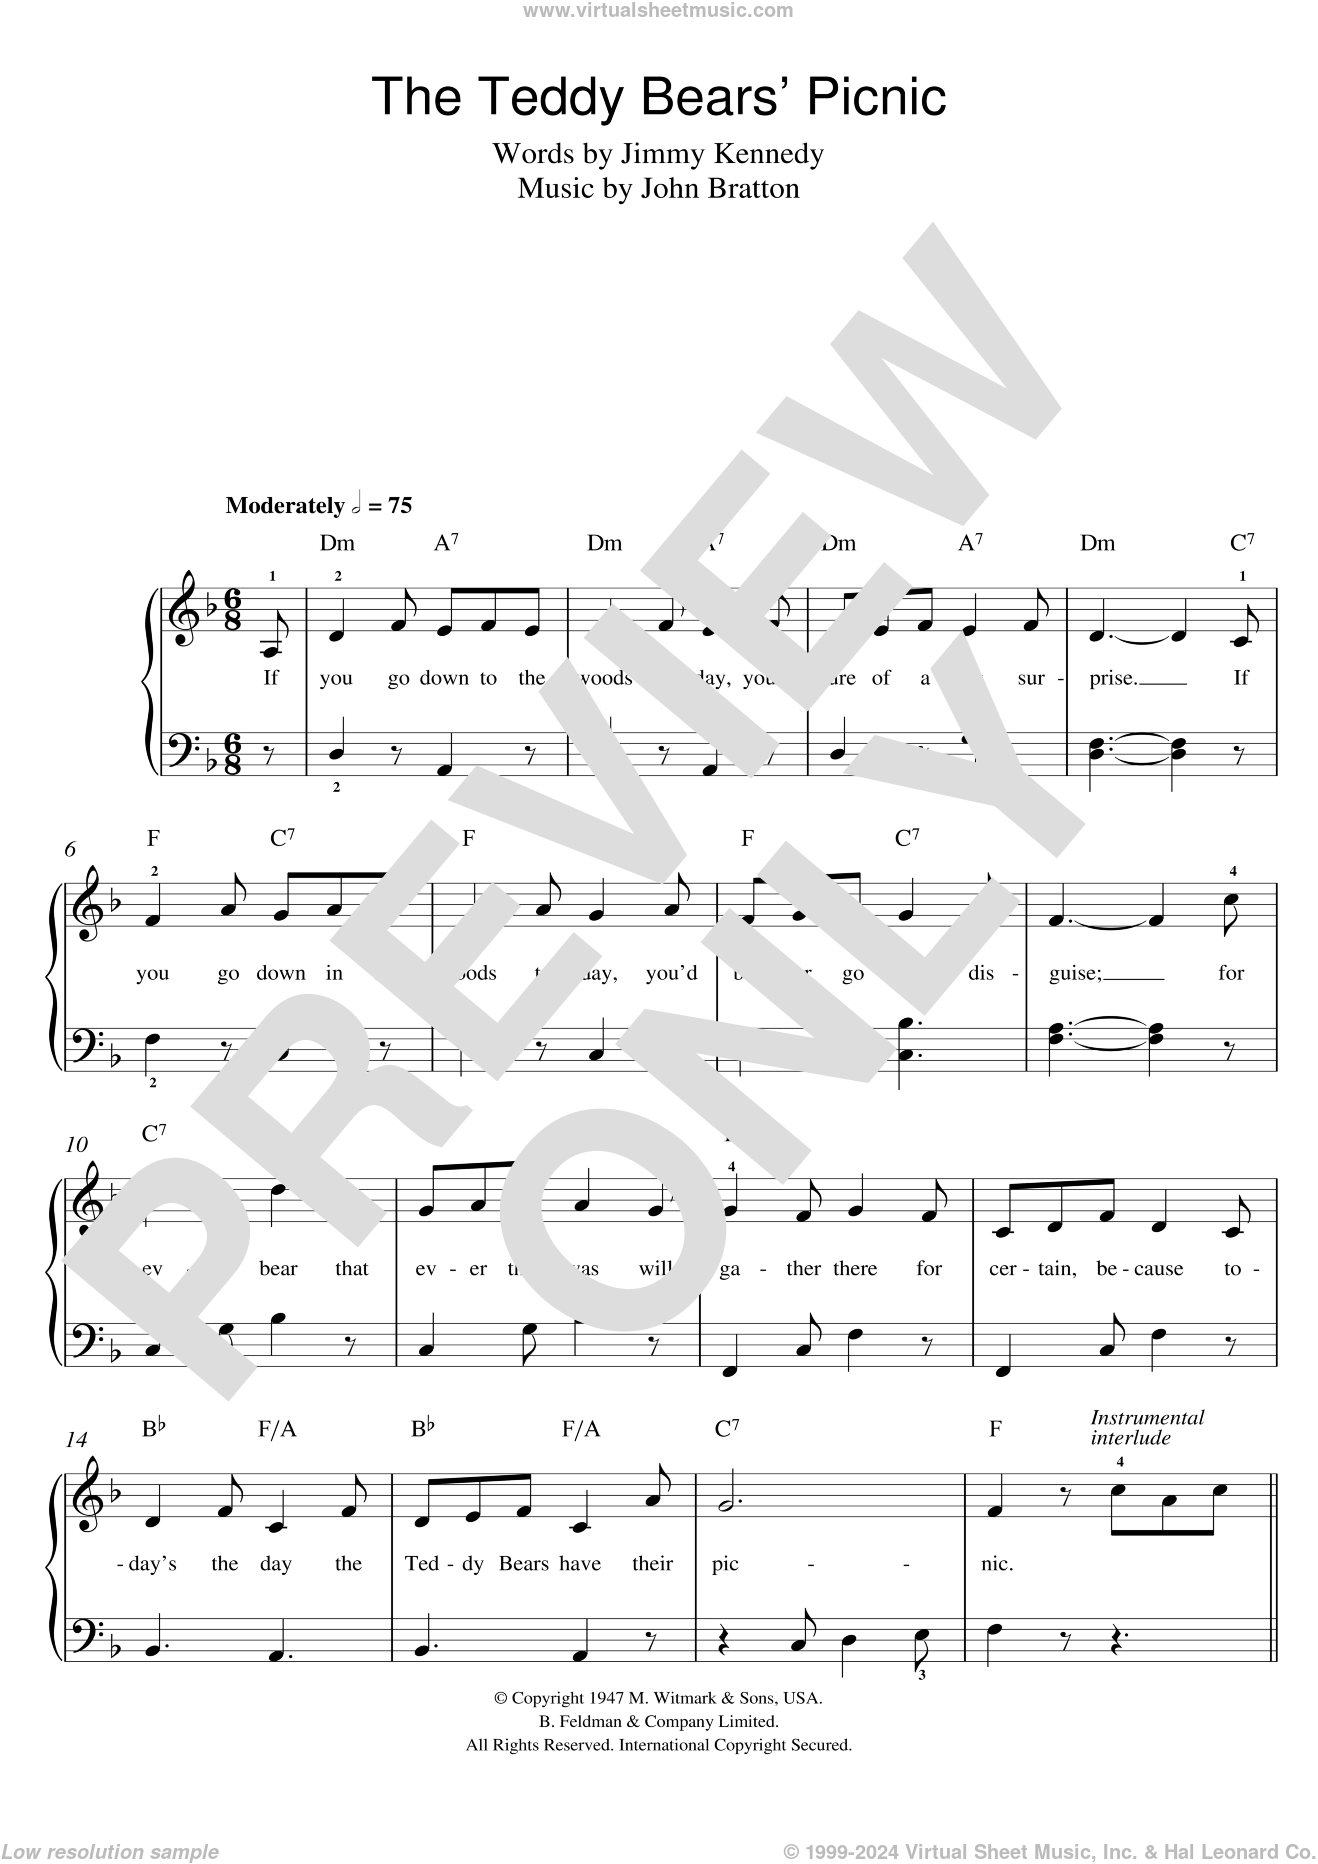 Bratton - The Teddy Bears' Picnic Sheet Music For Piano Solo